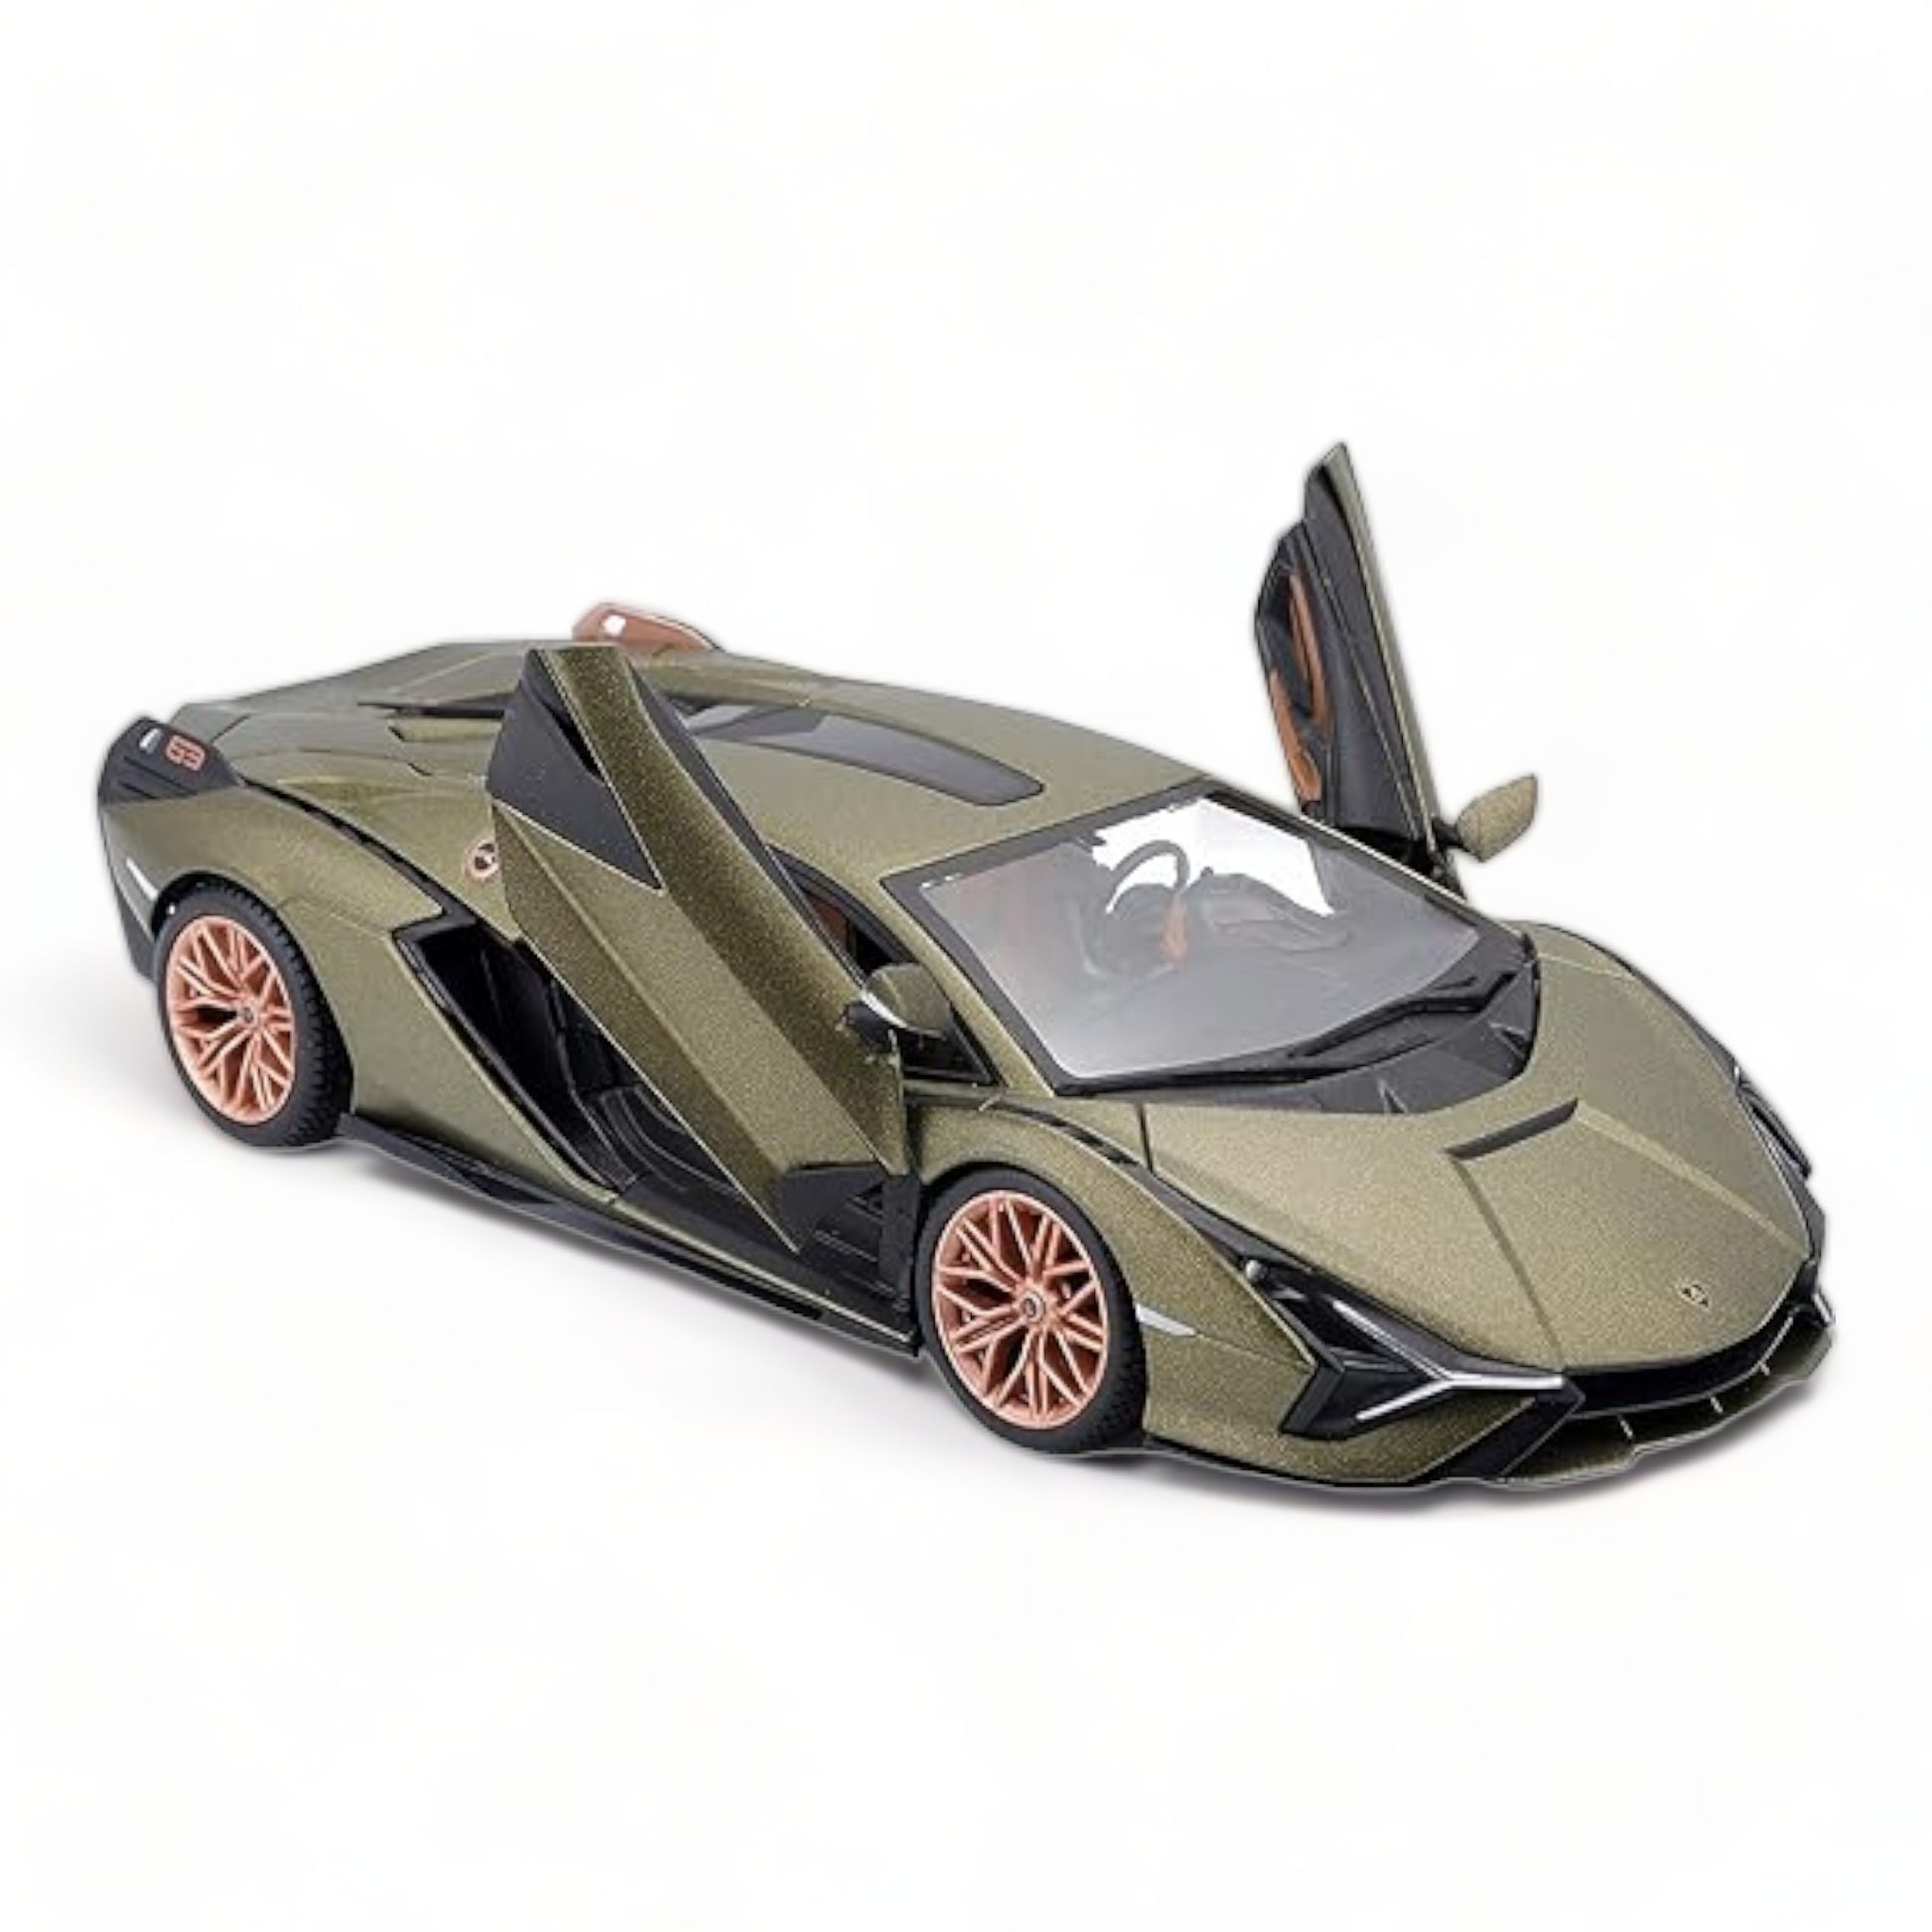 1/18 Diecast Lamborghini Sian FKP 37 Green Metallic  Bburago Scale Model Car